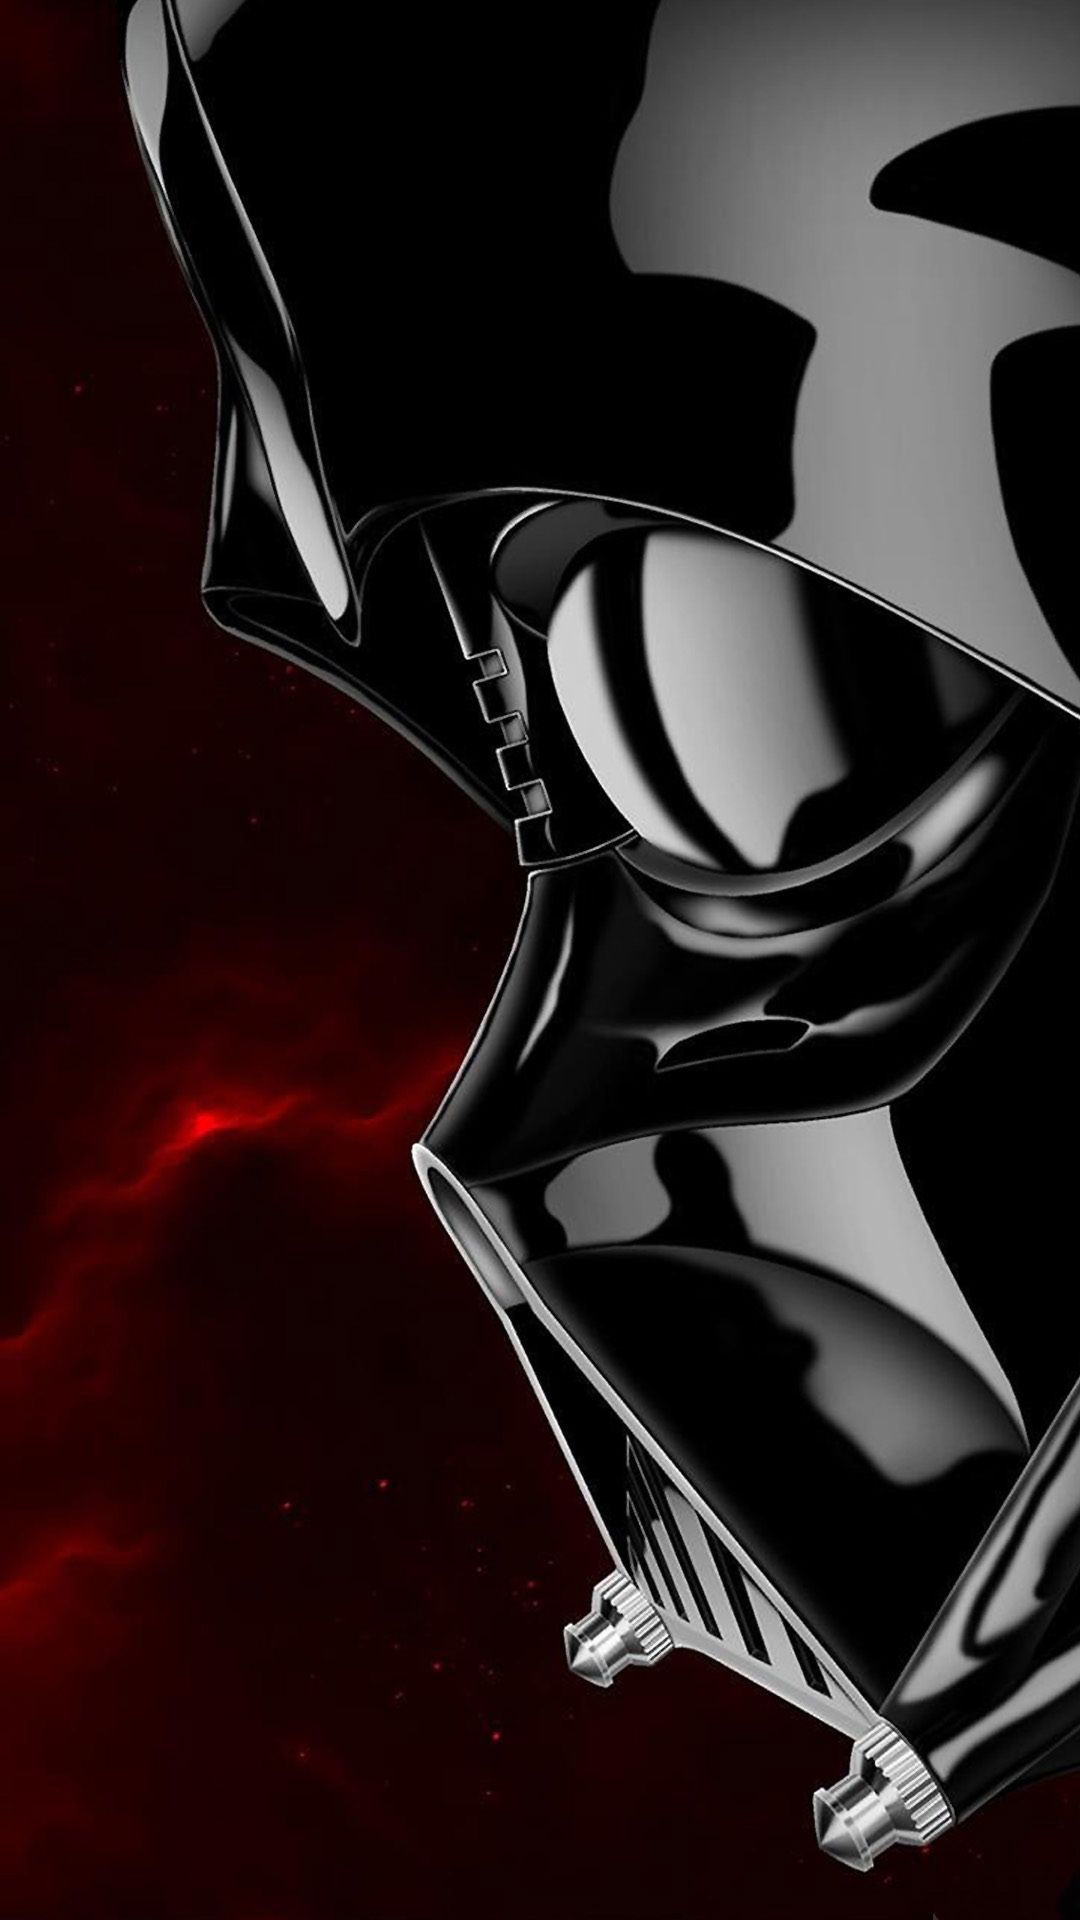 Darth Vader Star Wars Illustration iPhone Plus